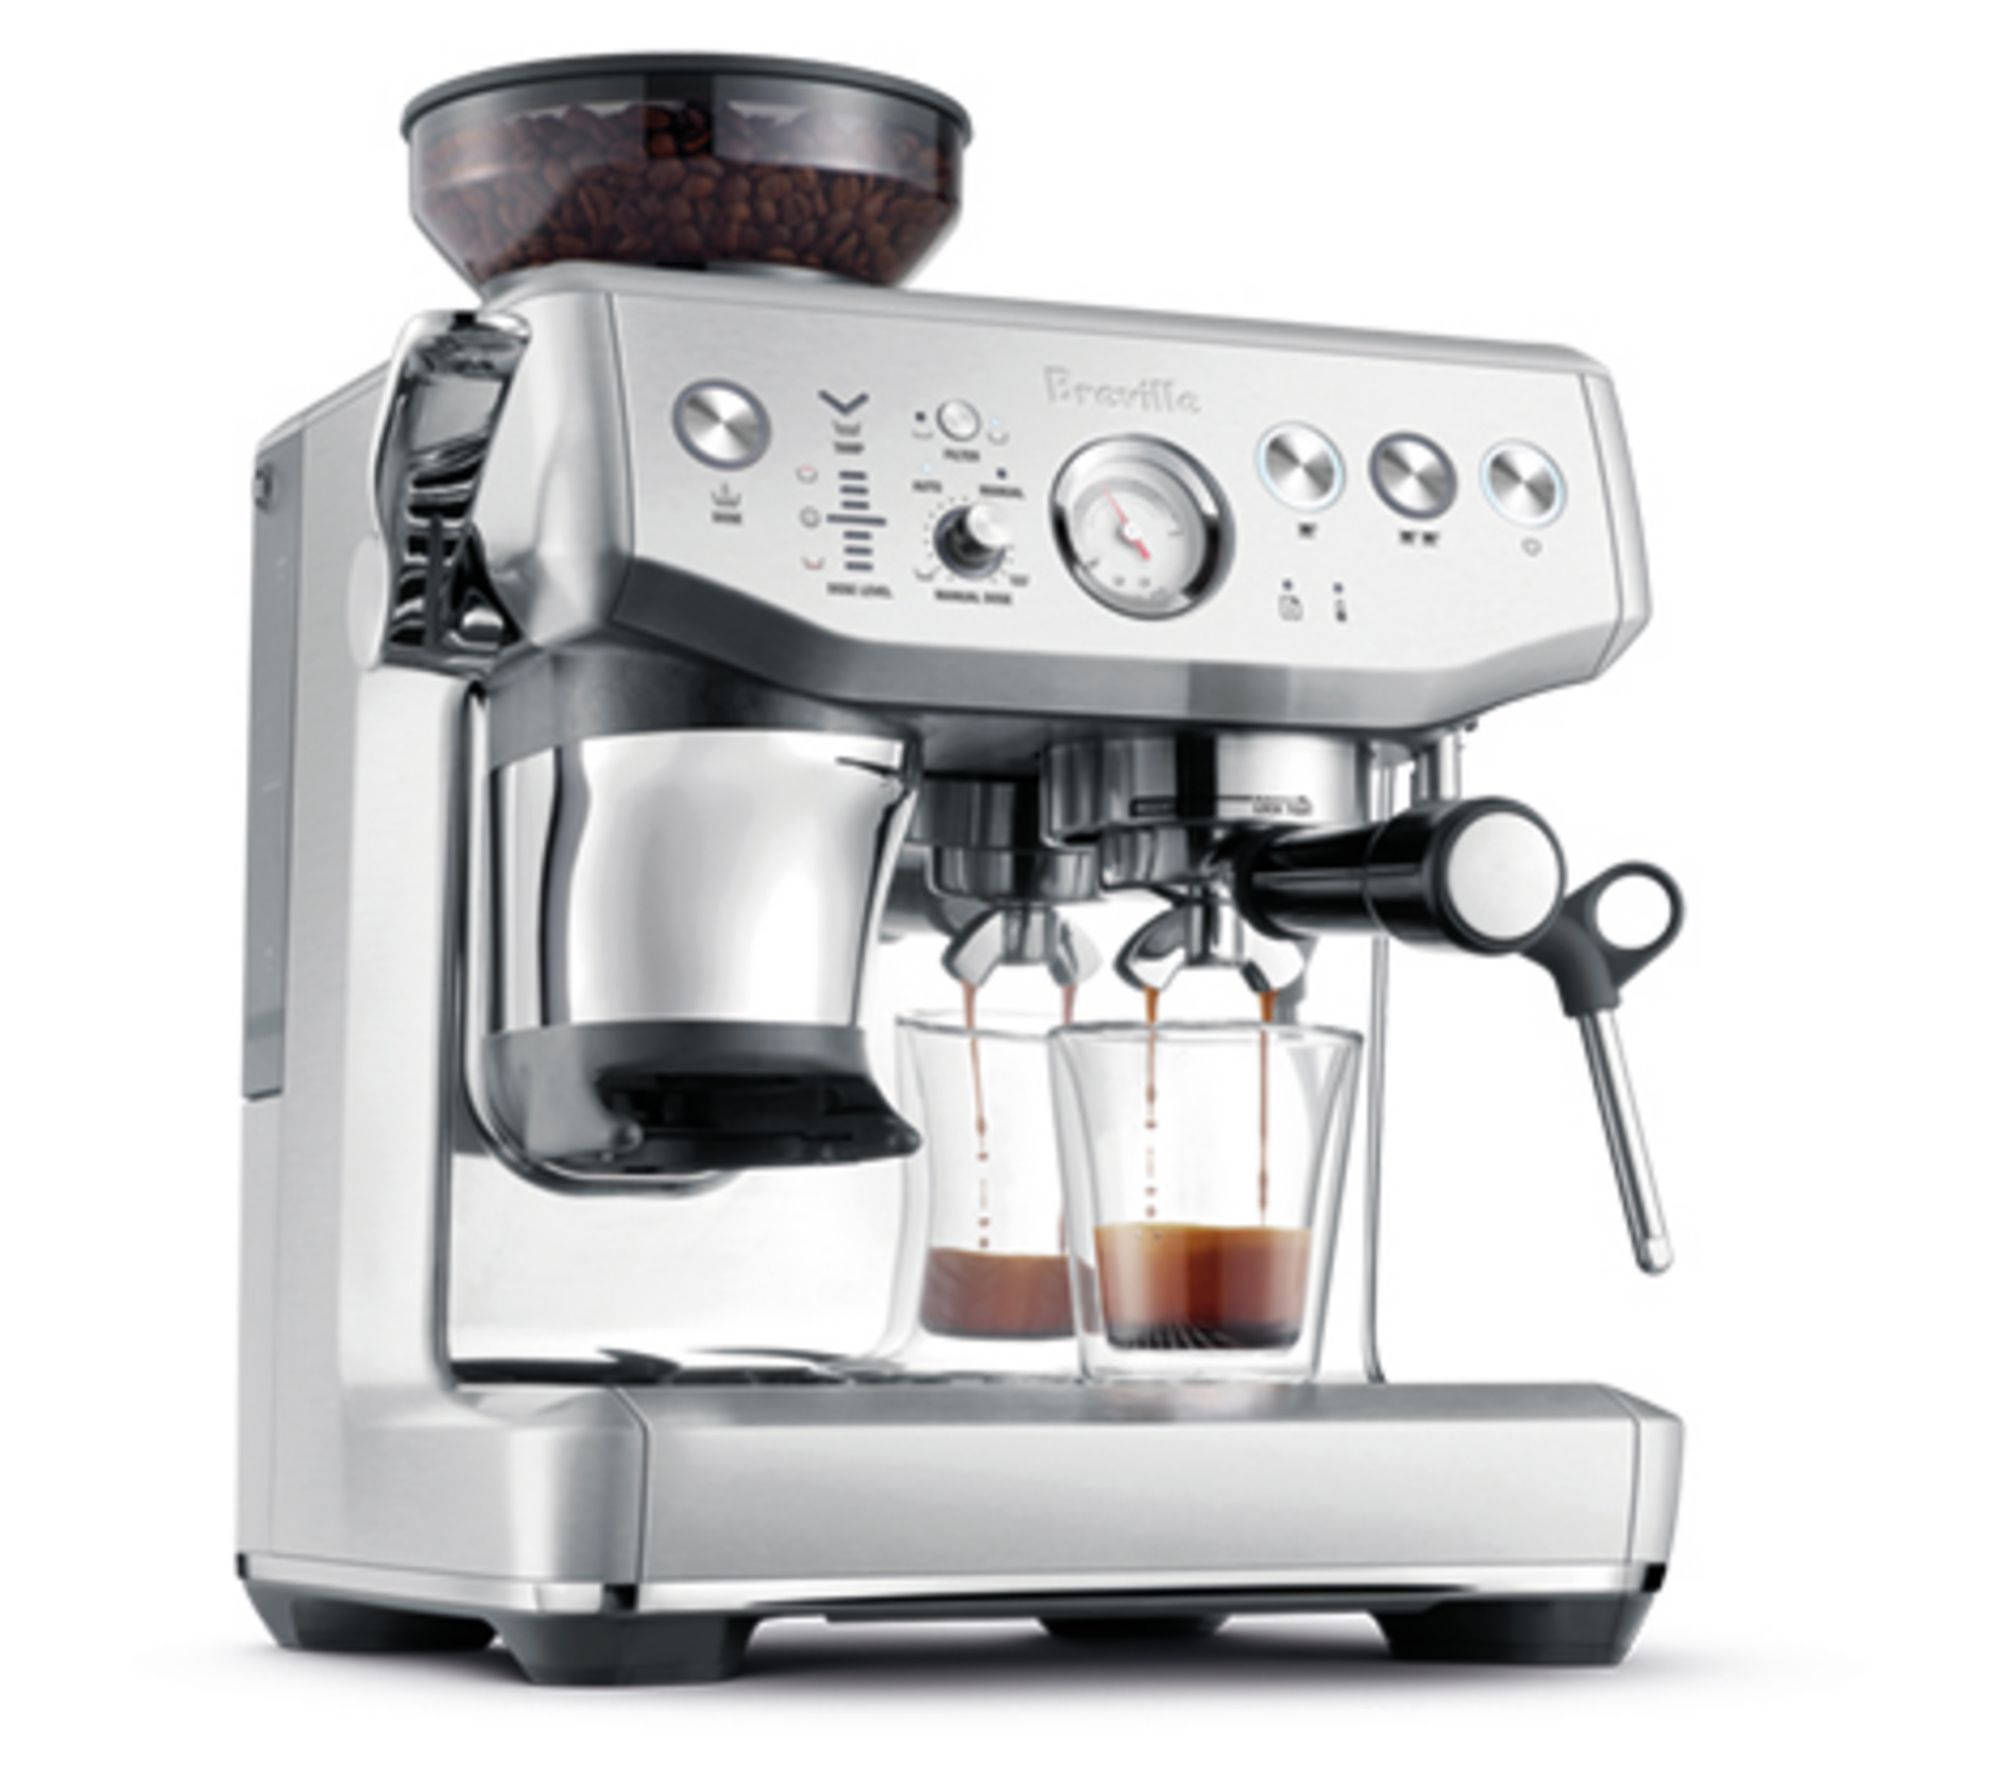 Aicook Espresso And Coffee Machine, 3 In 1 Combination 15Bar Espresso  Machine And Single Serve Coffee Maker Offer 